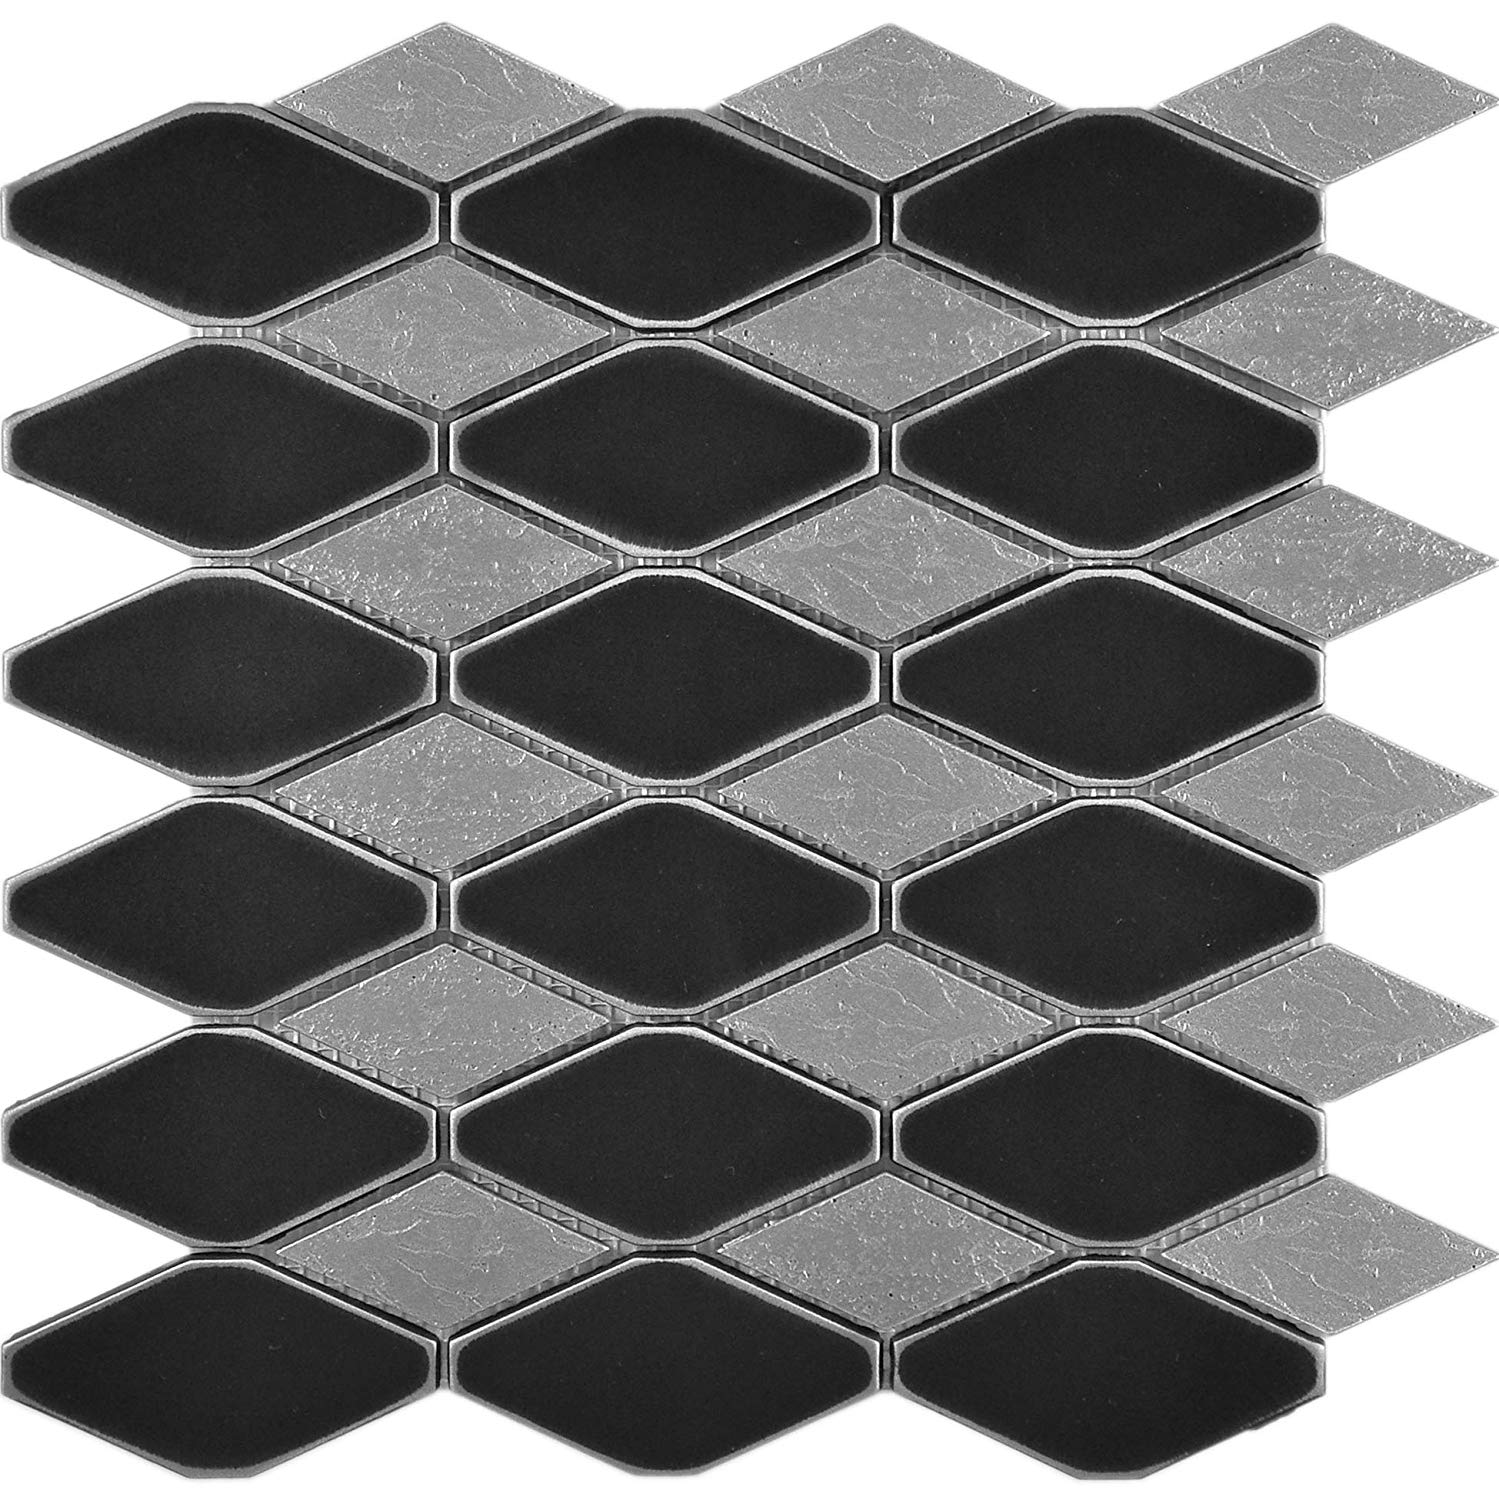 Premium Metal Octagon Silver Black Mosaic Tile for Kitchen Backsplashes, Wall, Bathroom Tile